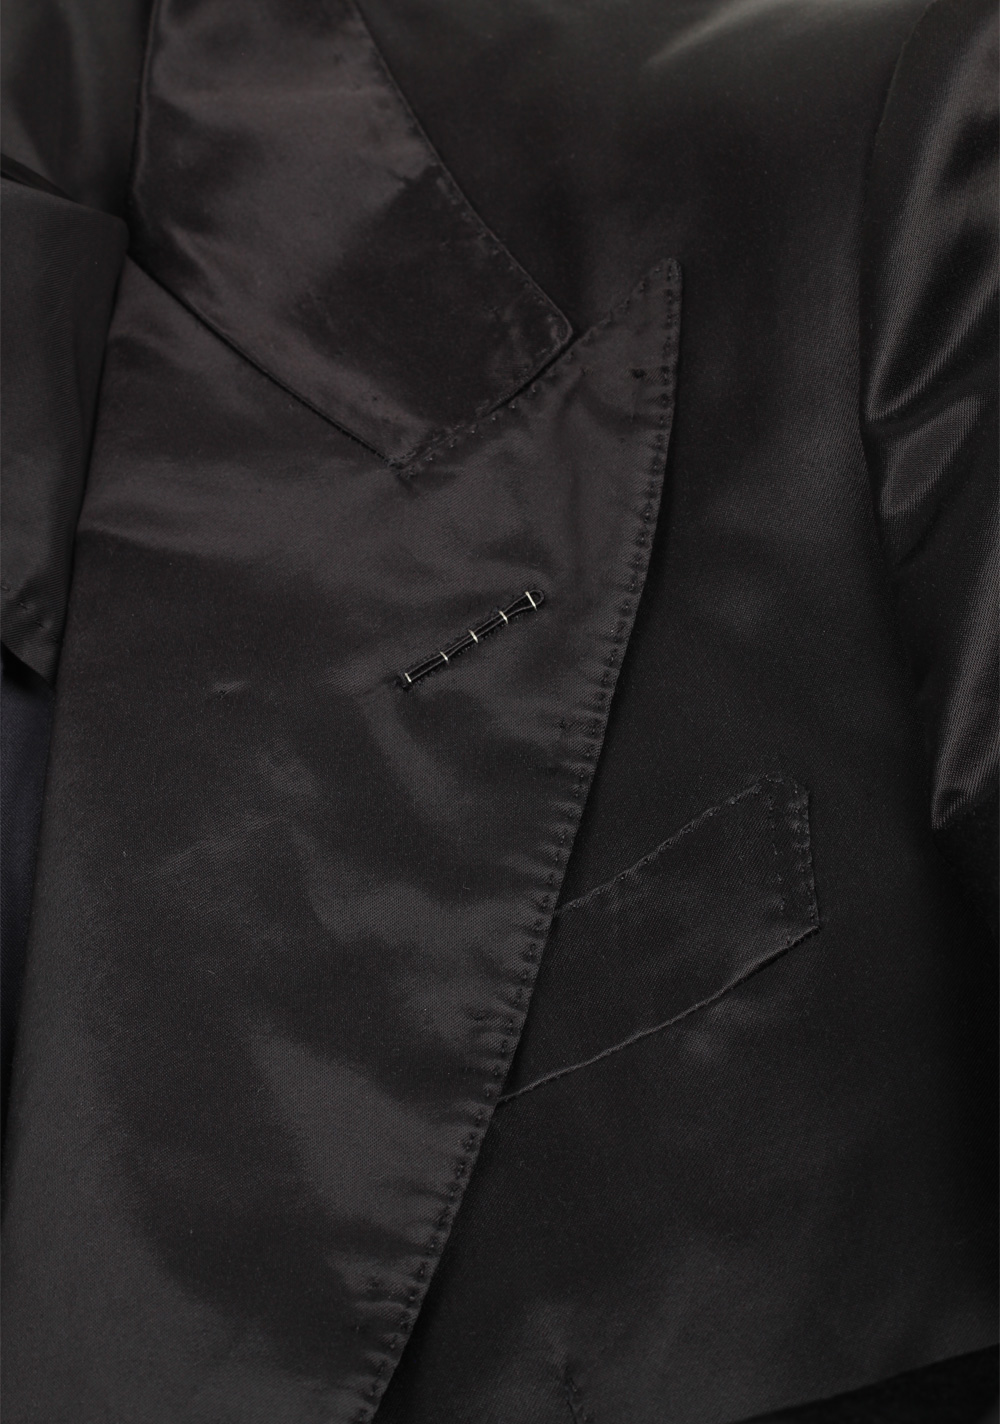 TOM FORD Atticus Black Sport Coat Size 46 / 36R U.S. | Costume Limité